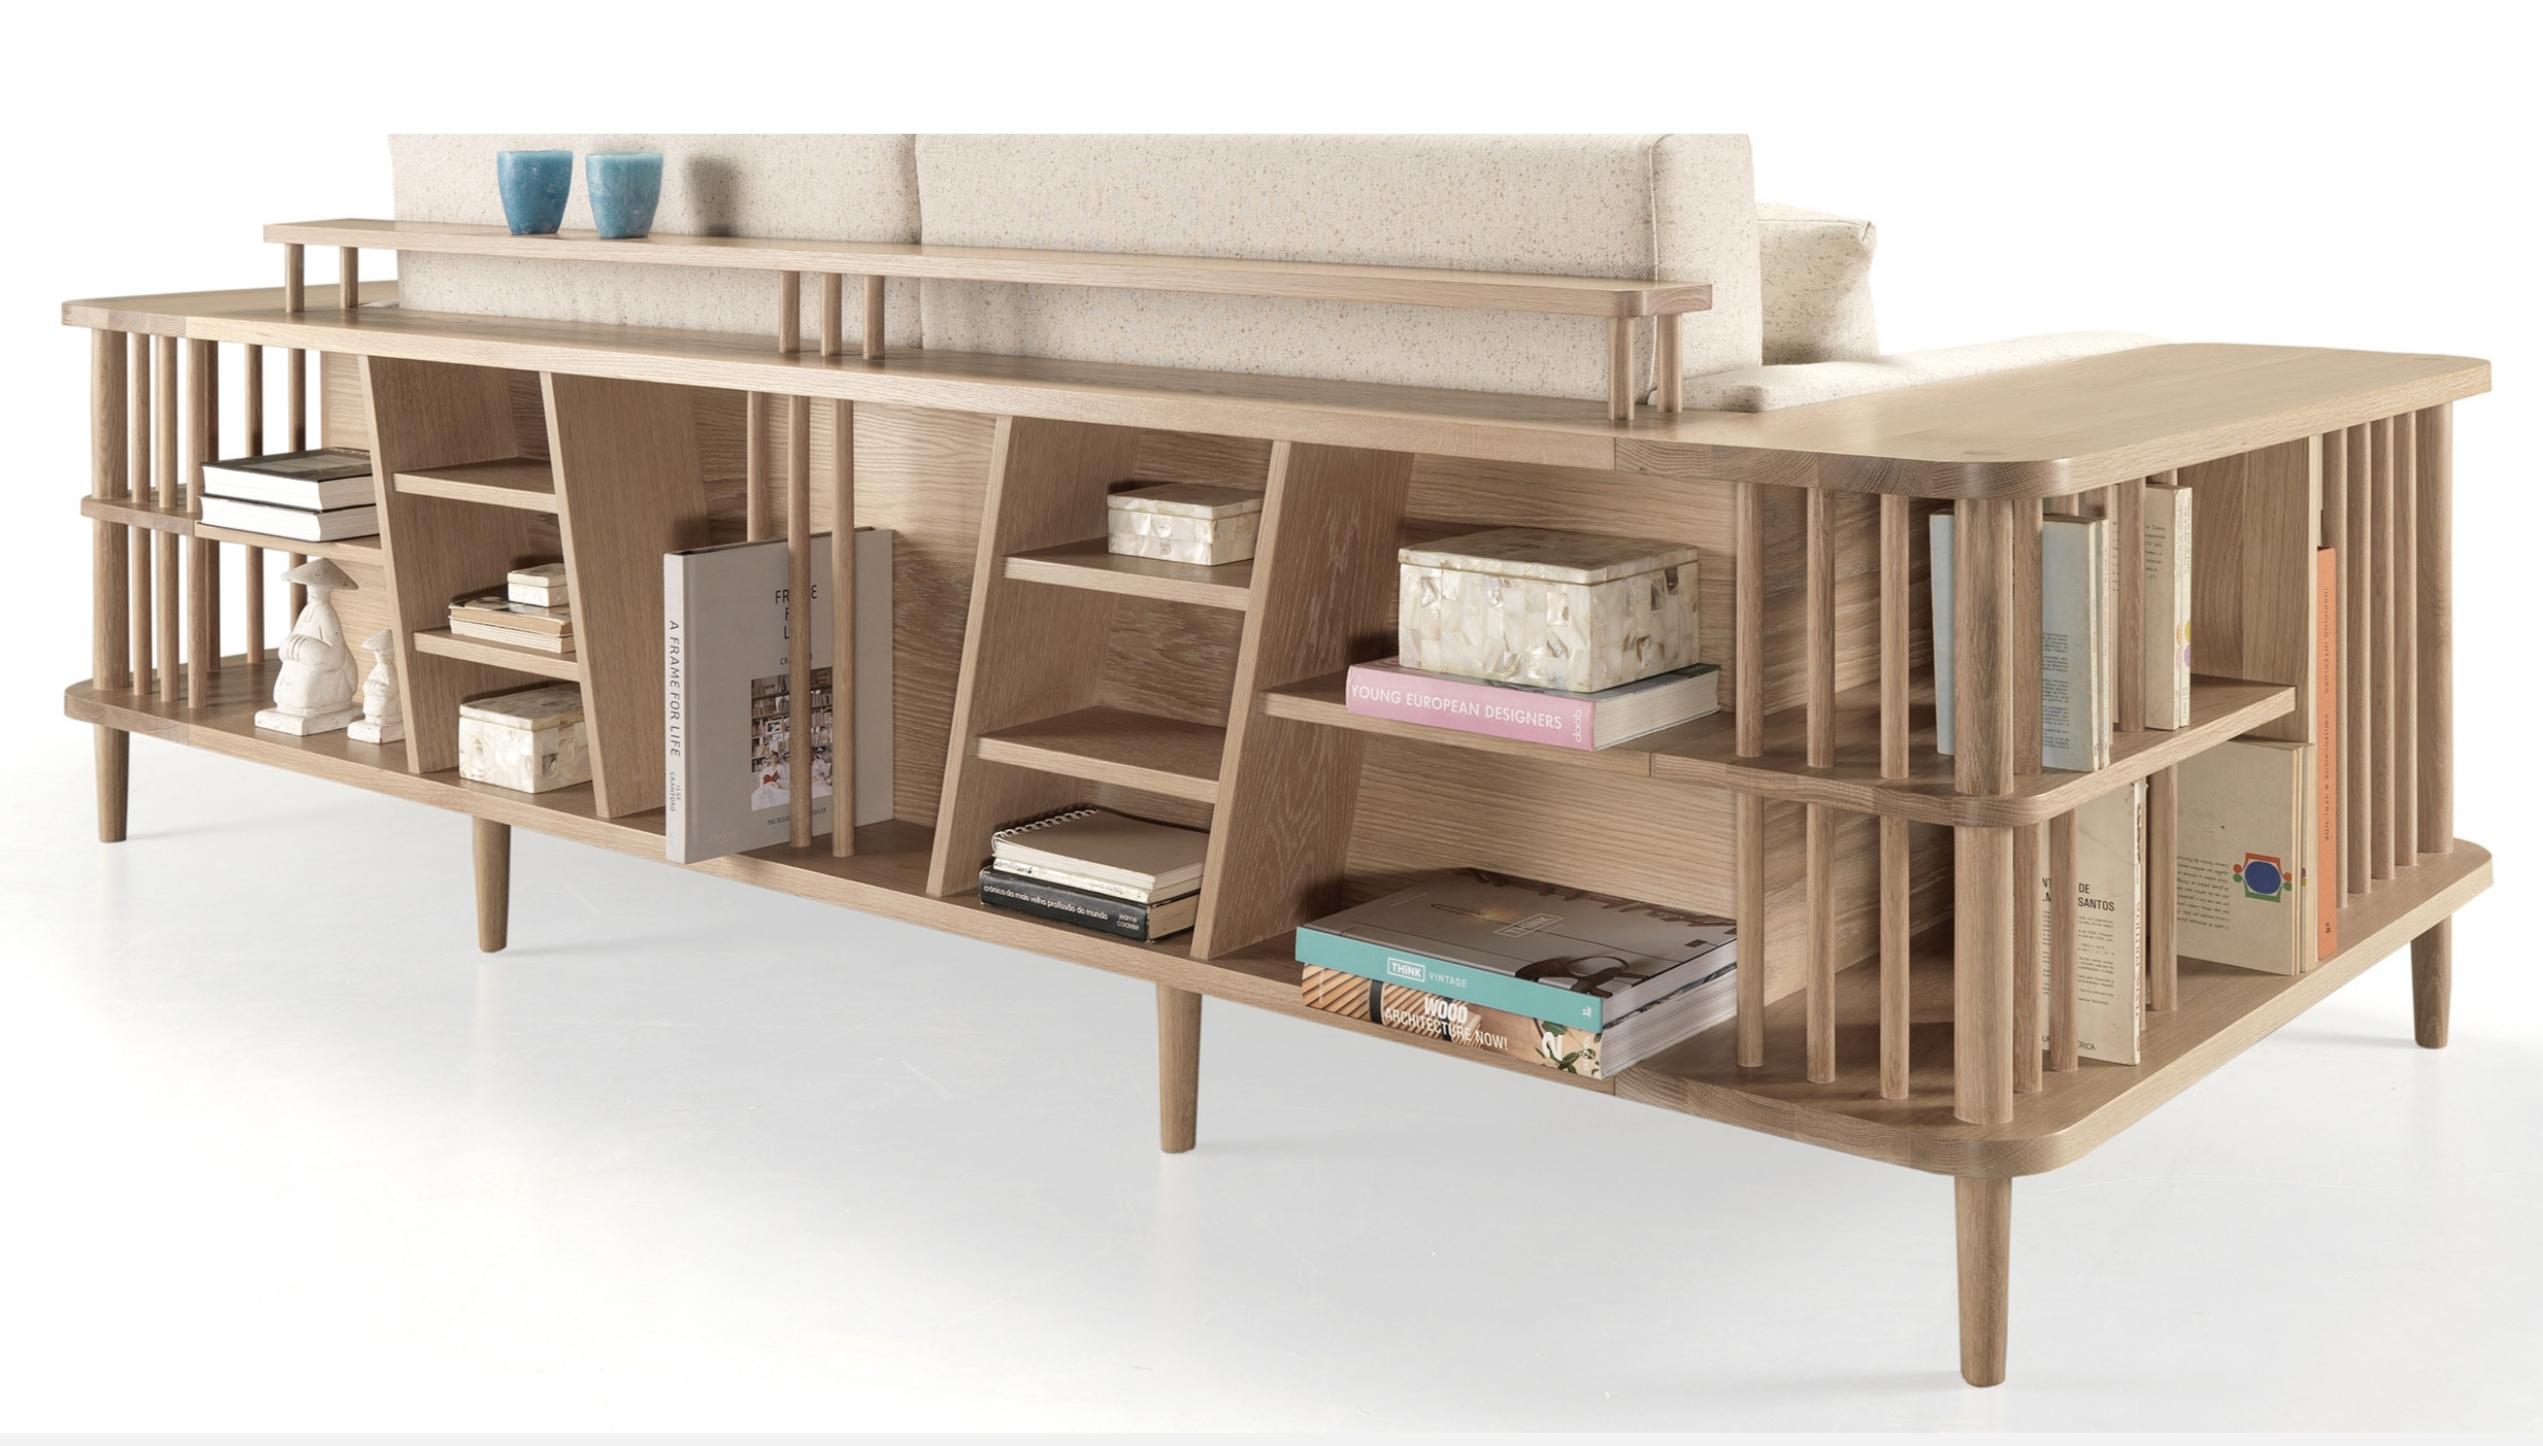 Nordic Style Sofa and Bookshelf Room Divider in Walnut or Oak 5